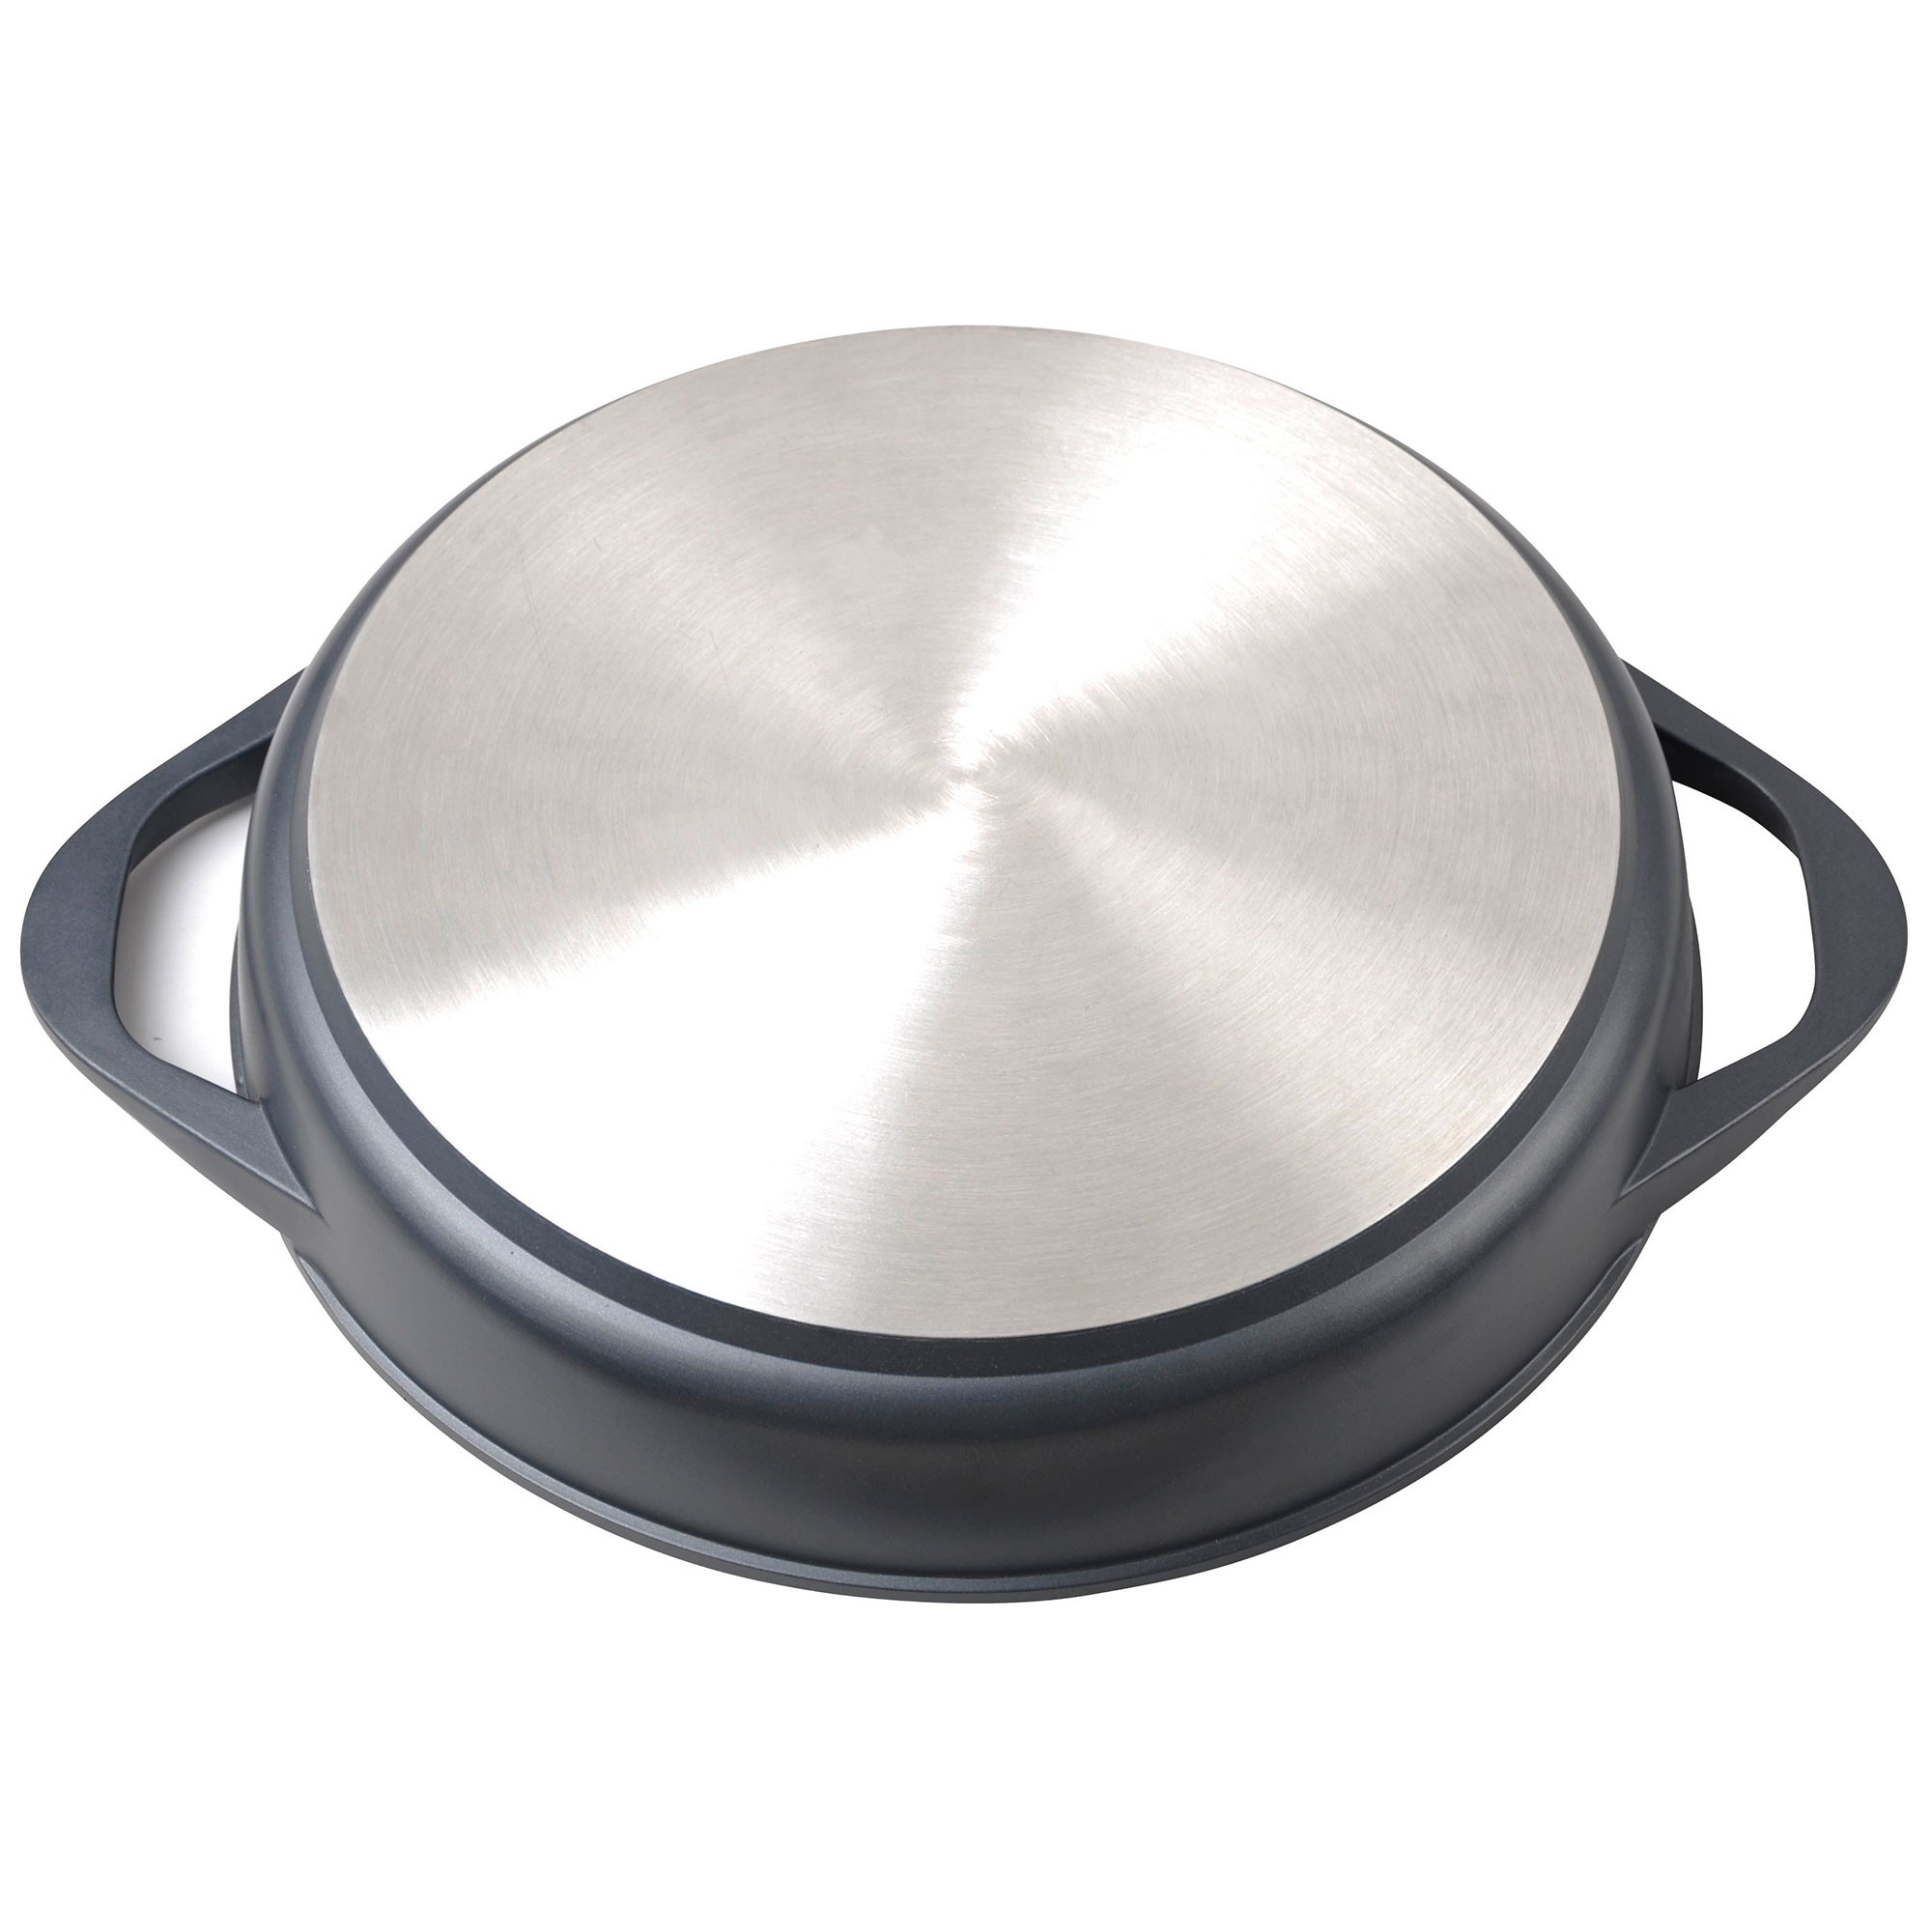 Libre de BPA Aluminio Forjado Tapa de Cristal Cacerola Antiadherente WeCook 10016 Cazuela de Cocina Inducción Profesional 16 cm 